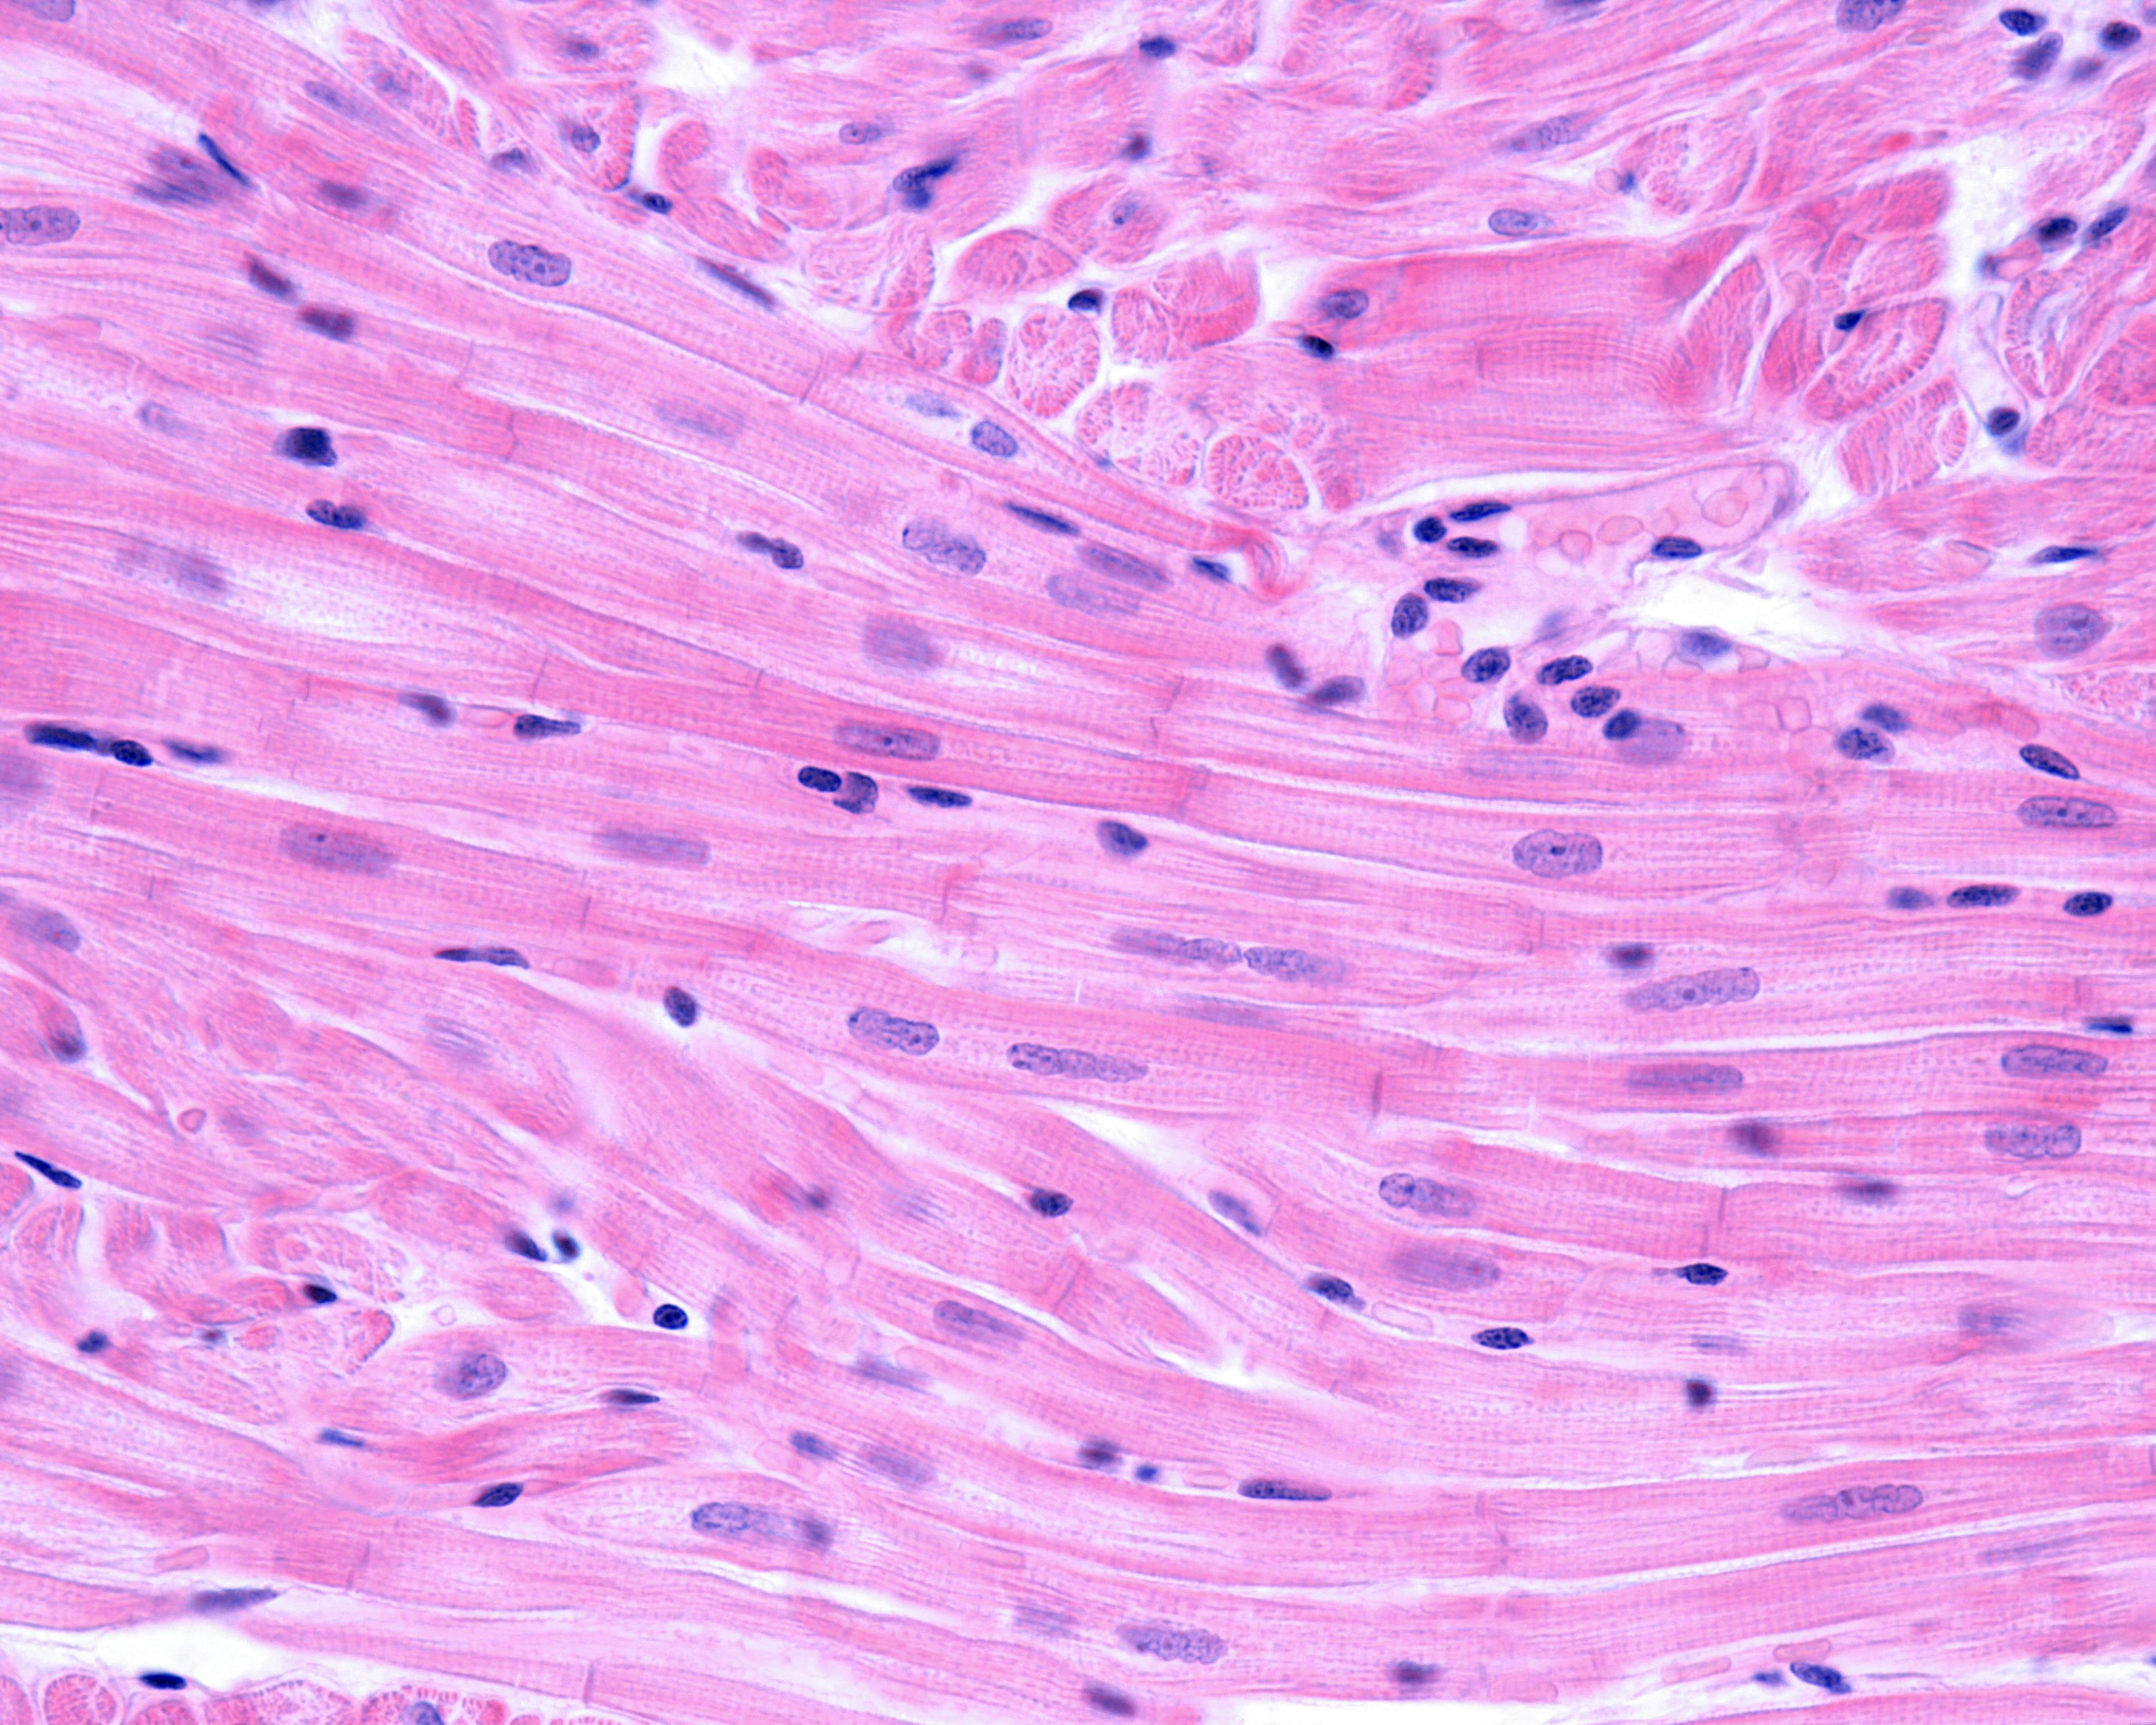 Cardiac muscle fibers in the myocardium. Image Credit: Adobe Stock Images/JosLuis.com